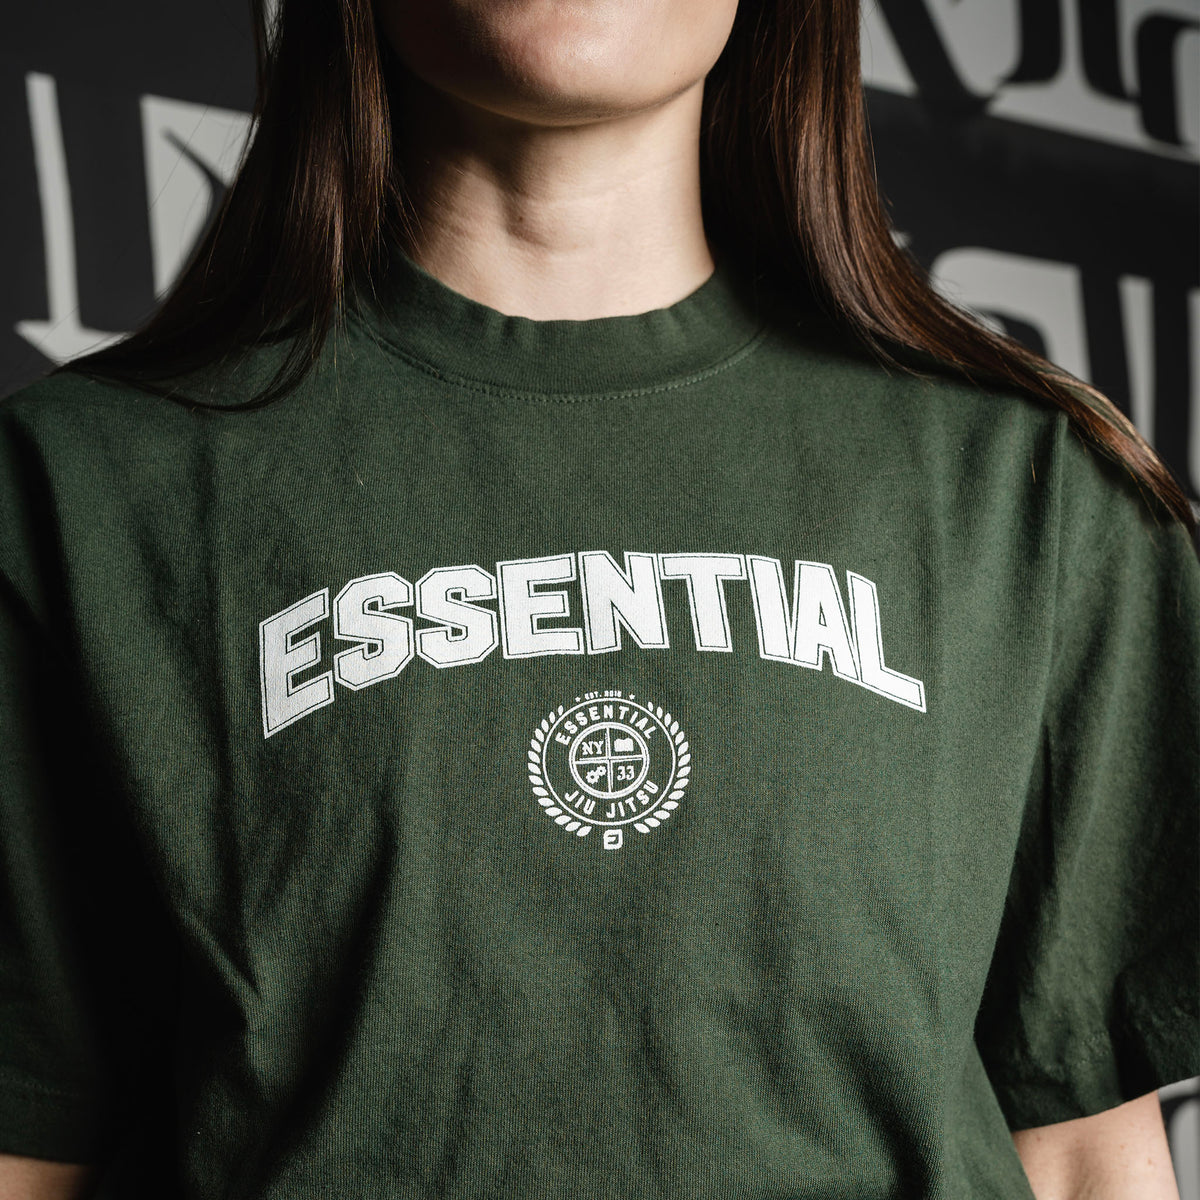 Essential University Crest T-Shirt